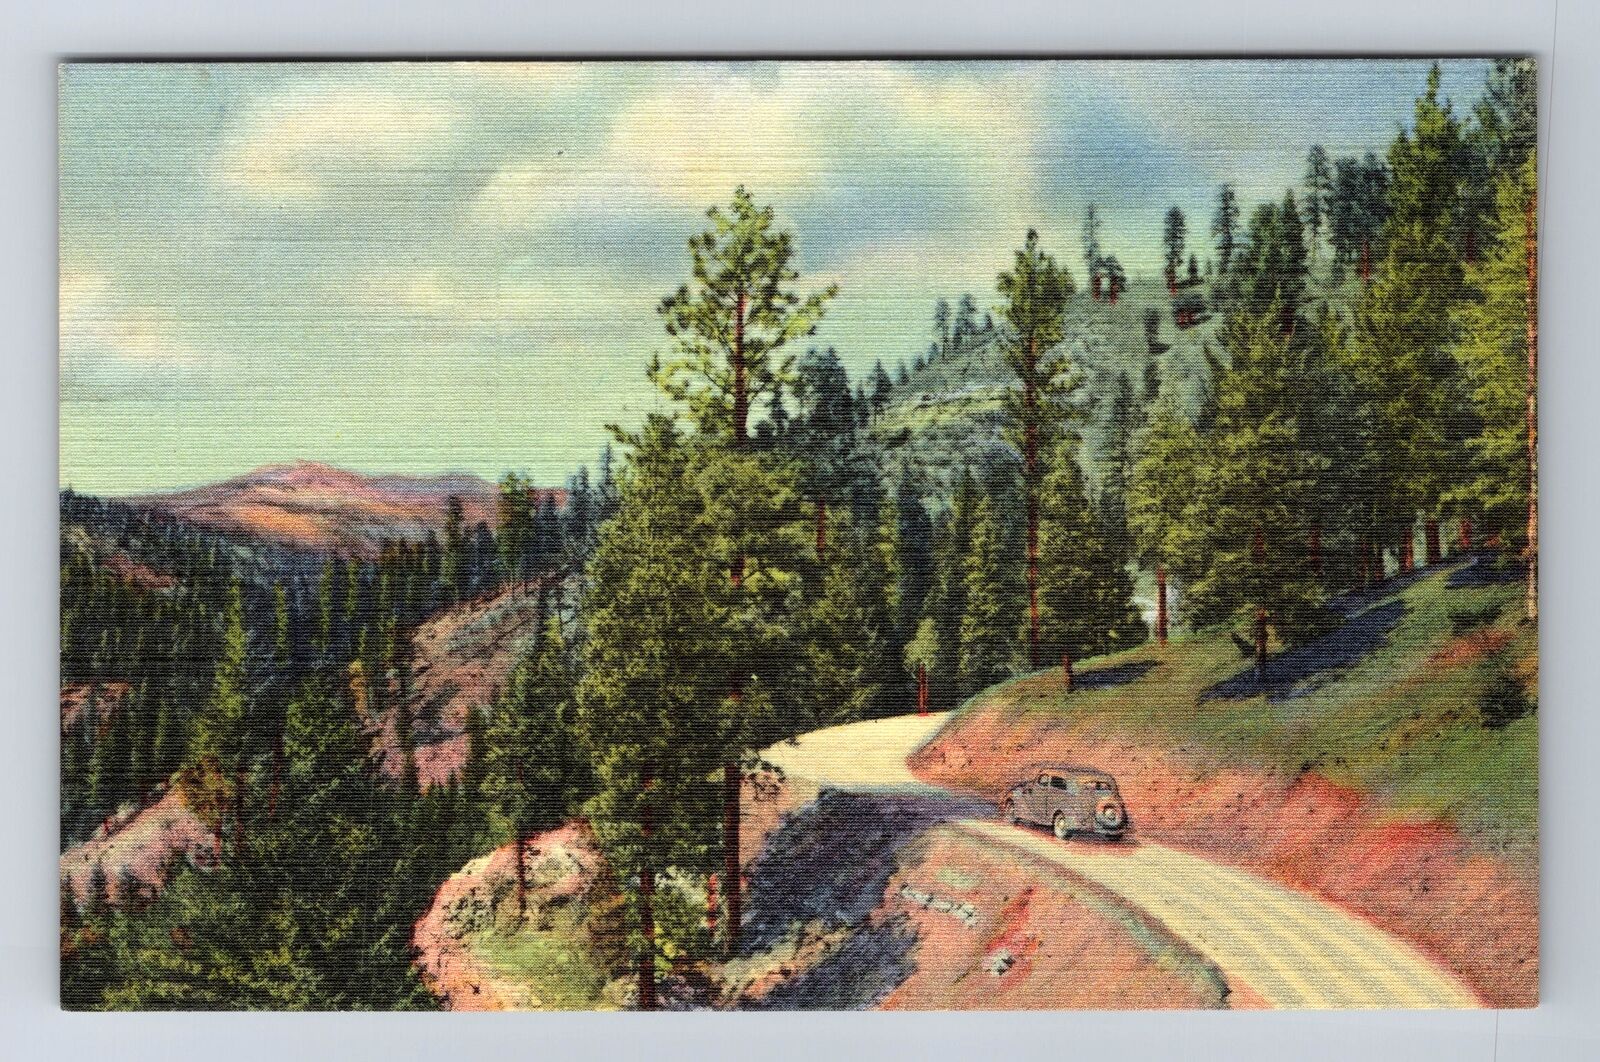 Santa Fe NM-New Mexico, Pecos River Drive Scenic View, Vintage Souvenir Postcard